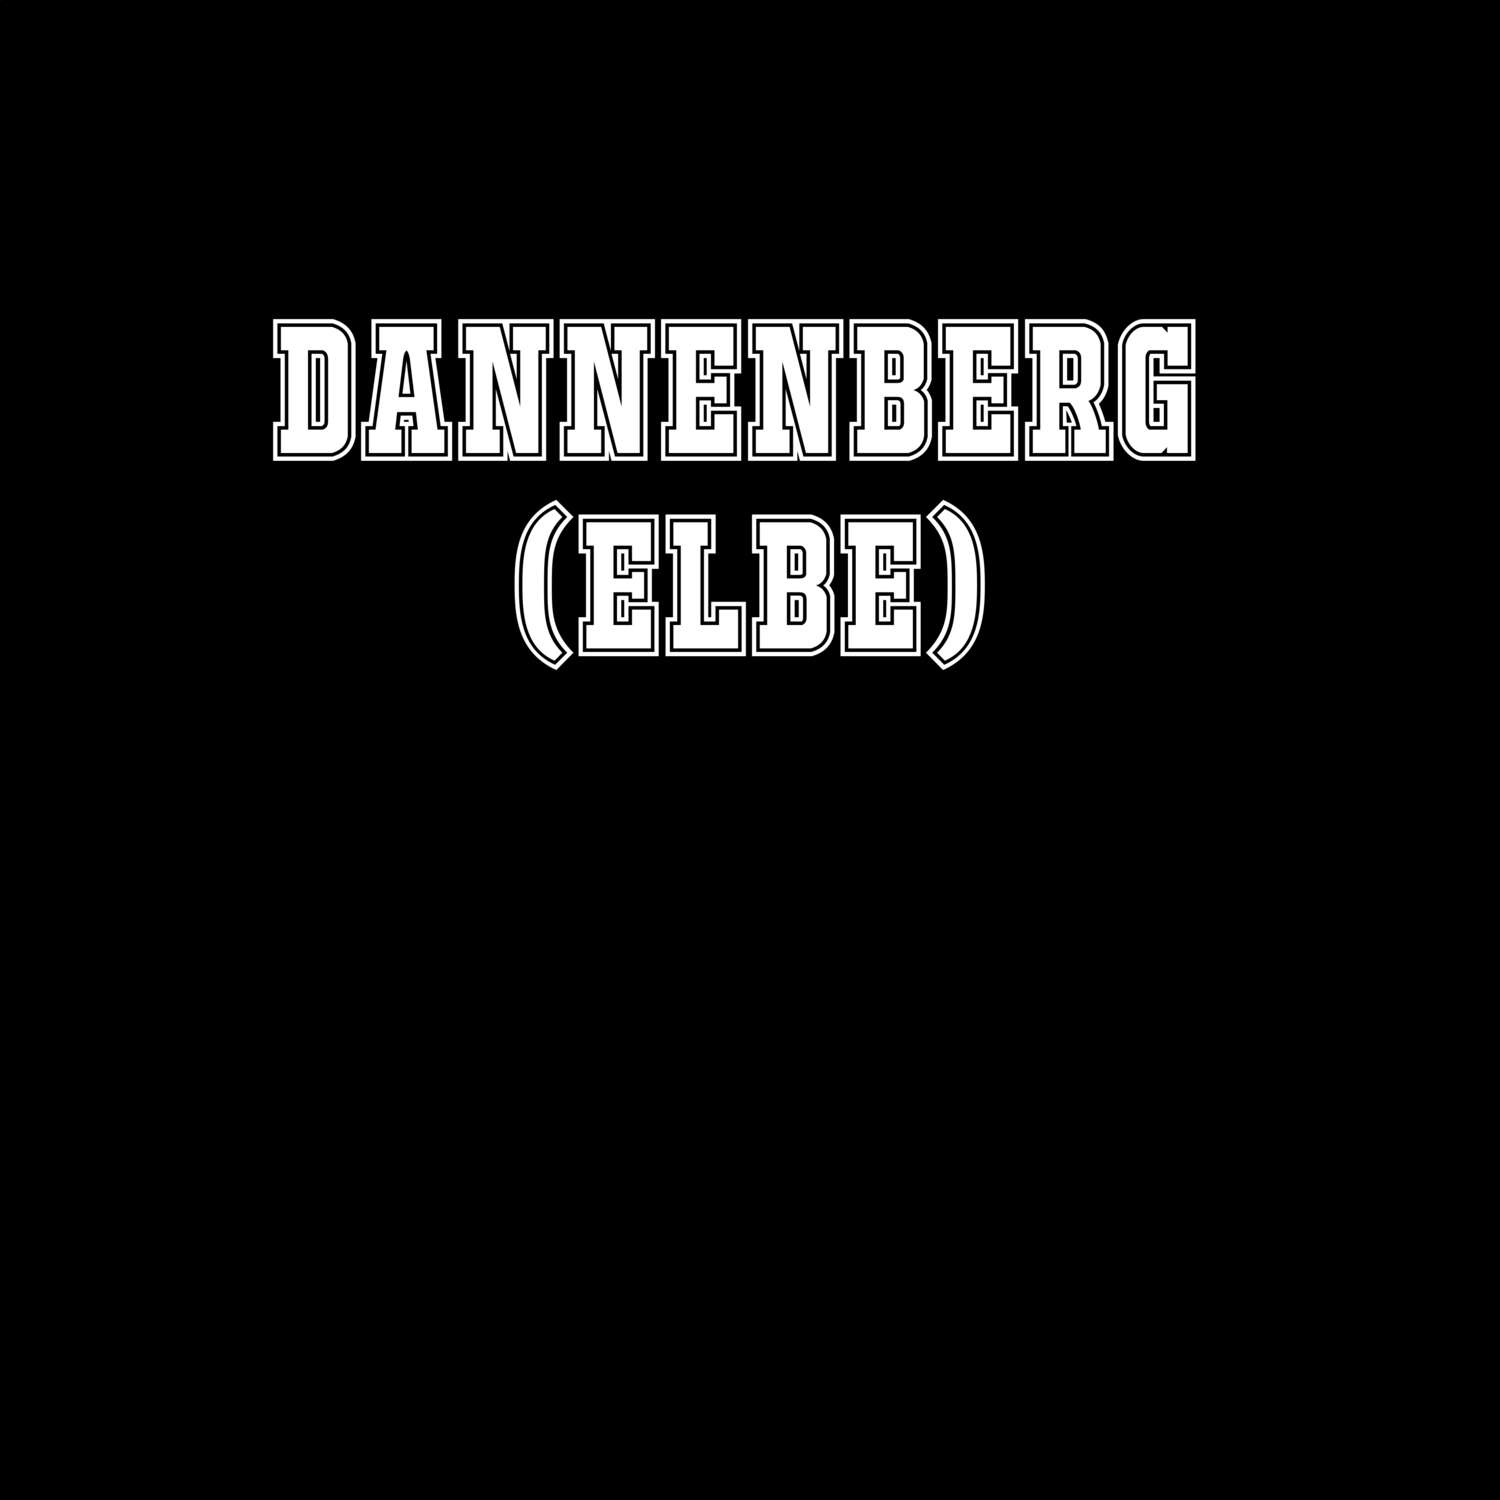 Dannenberg (Elbe) T-Shirt »Classic«